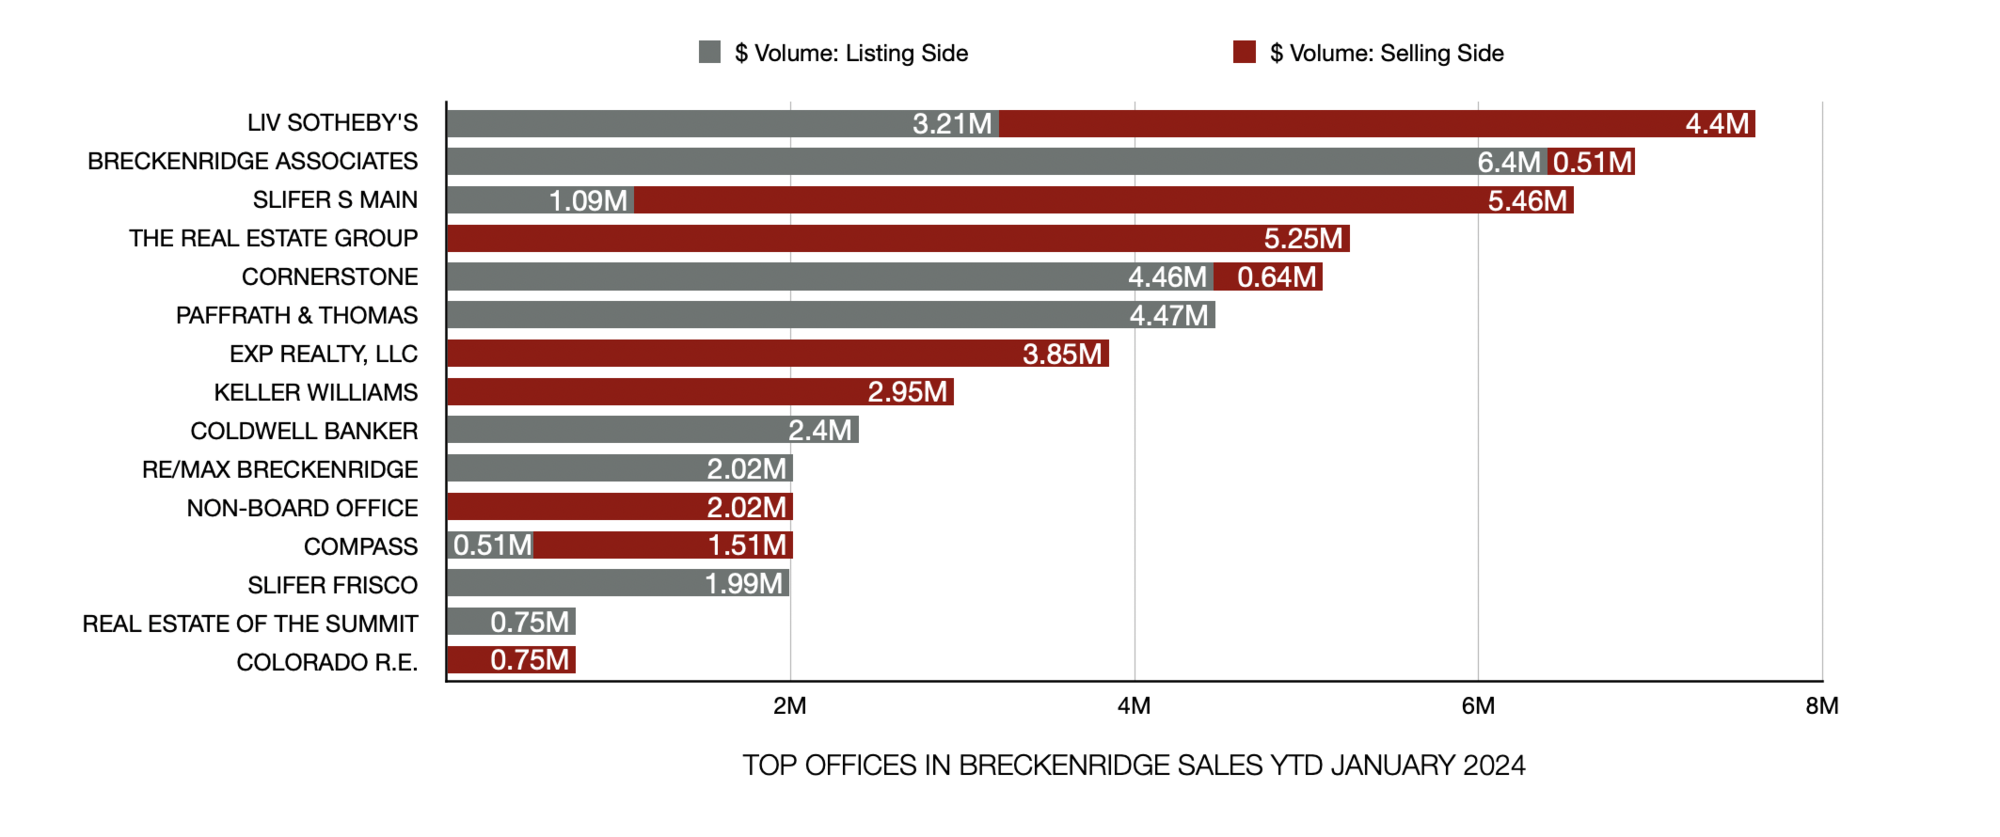 Top Selling Real Estate Offices in Breckenridge, Colorado Jan 2024